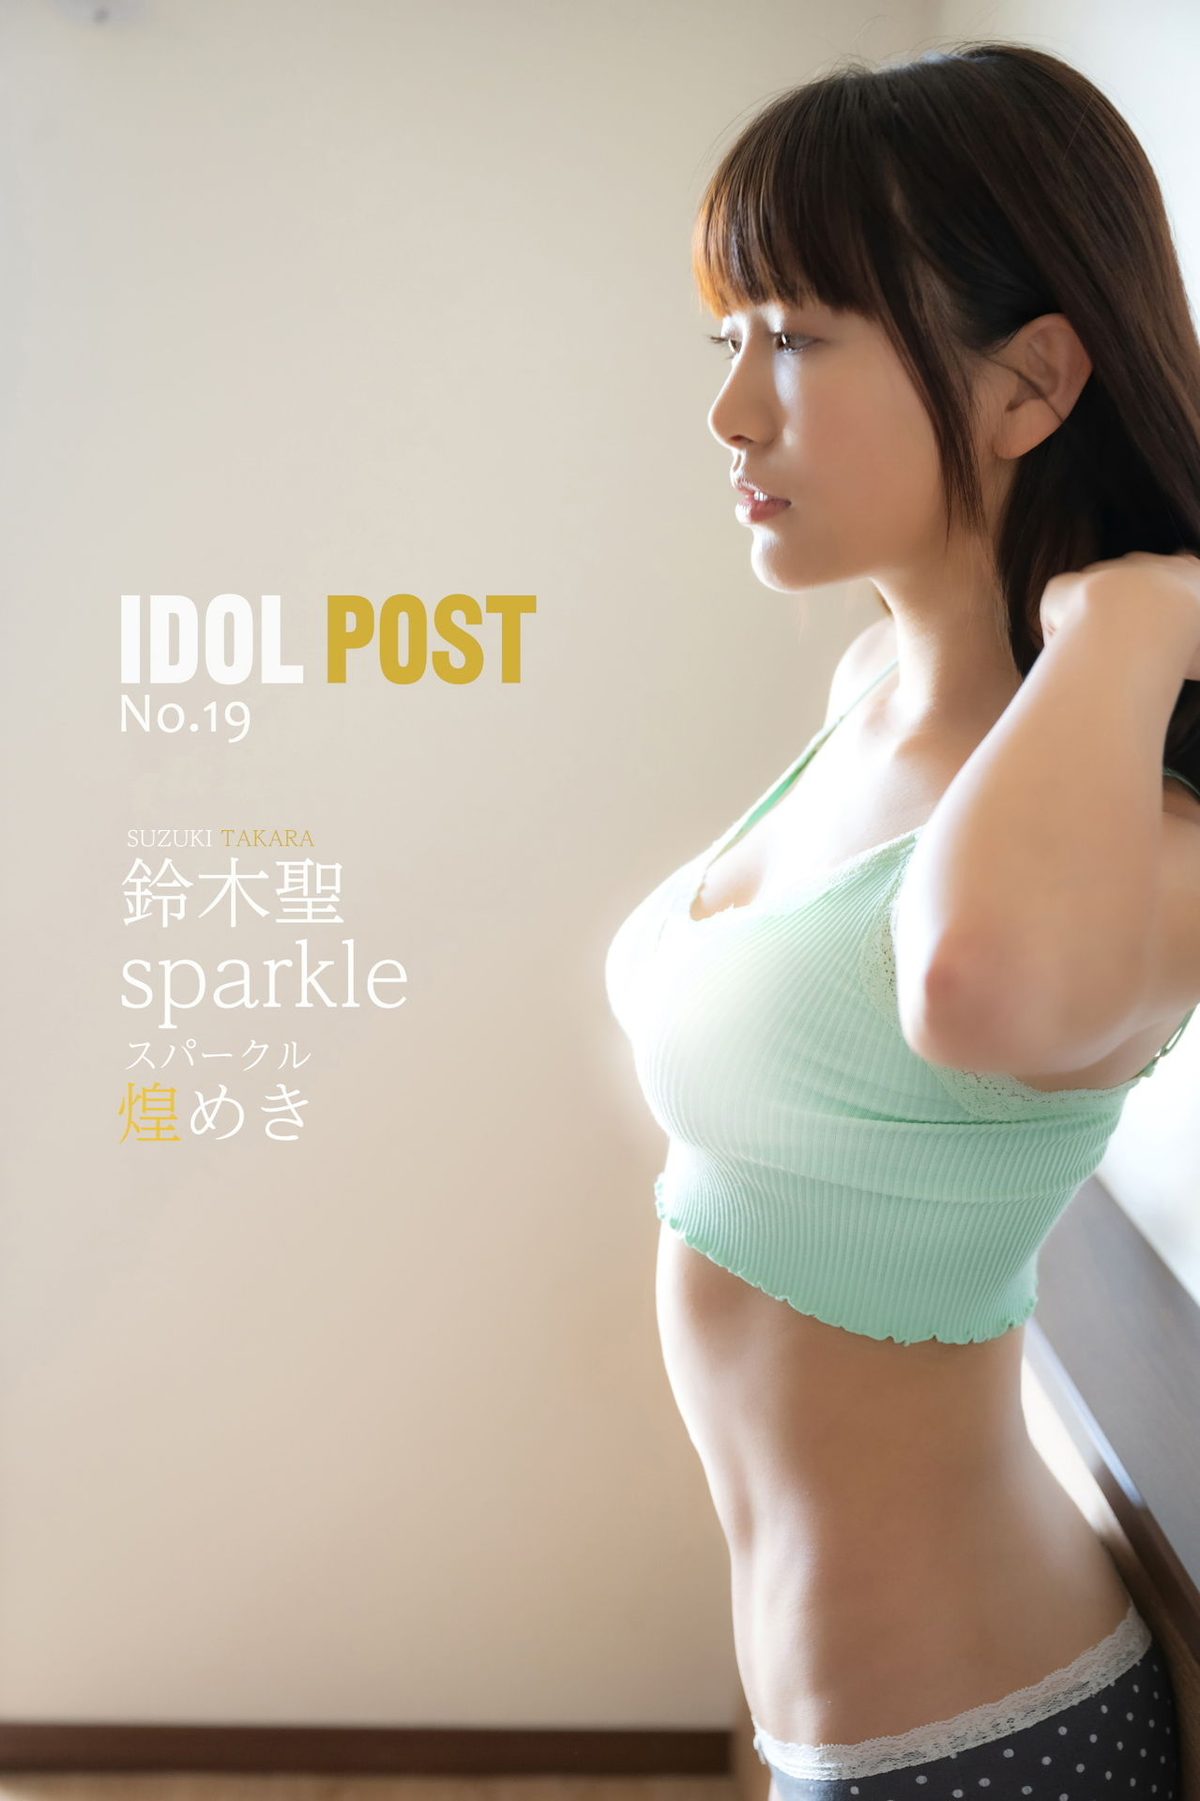 Takara Suzuki 鈴木聖 Idolpost Sparkle A 0001 0969533207.jpg